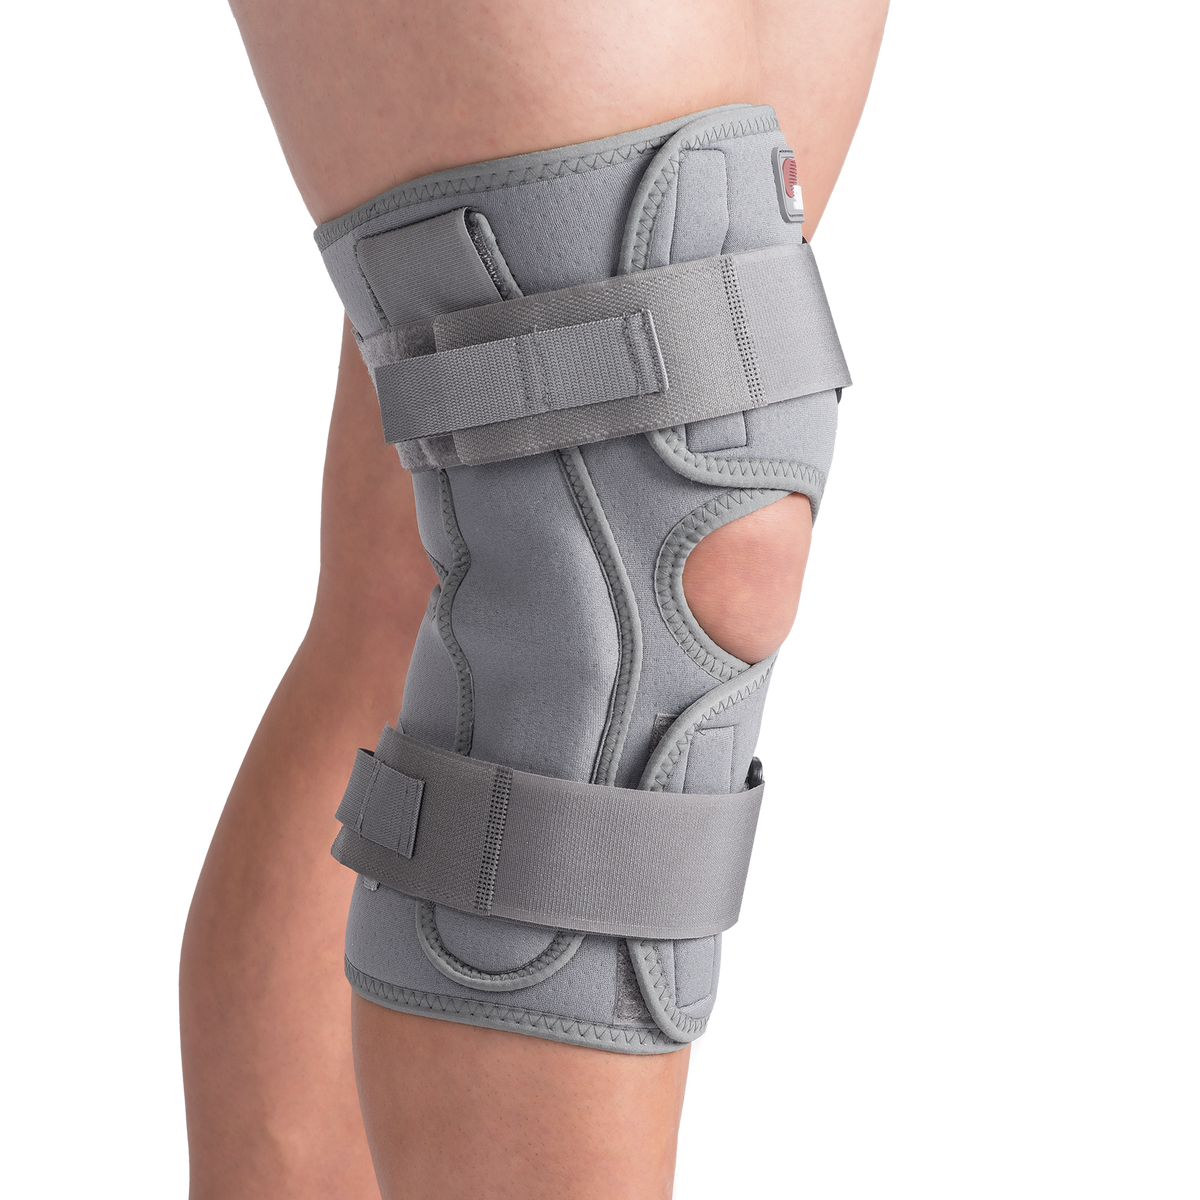 Pin on hinged knee brace